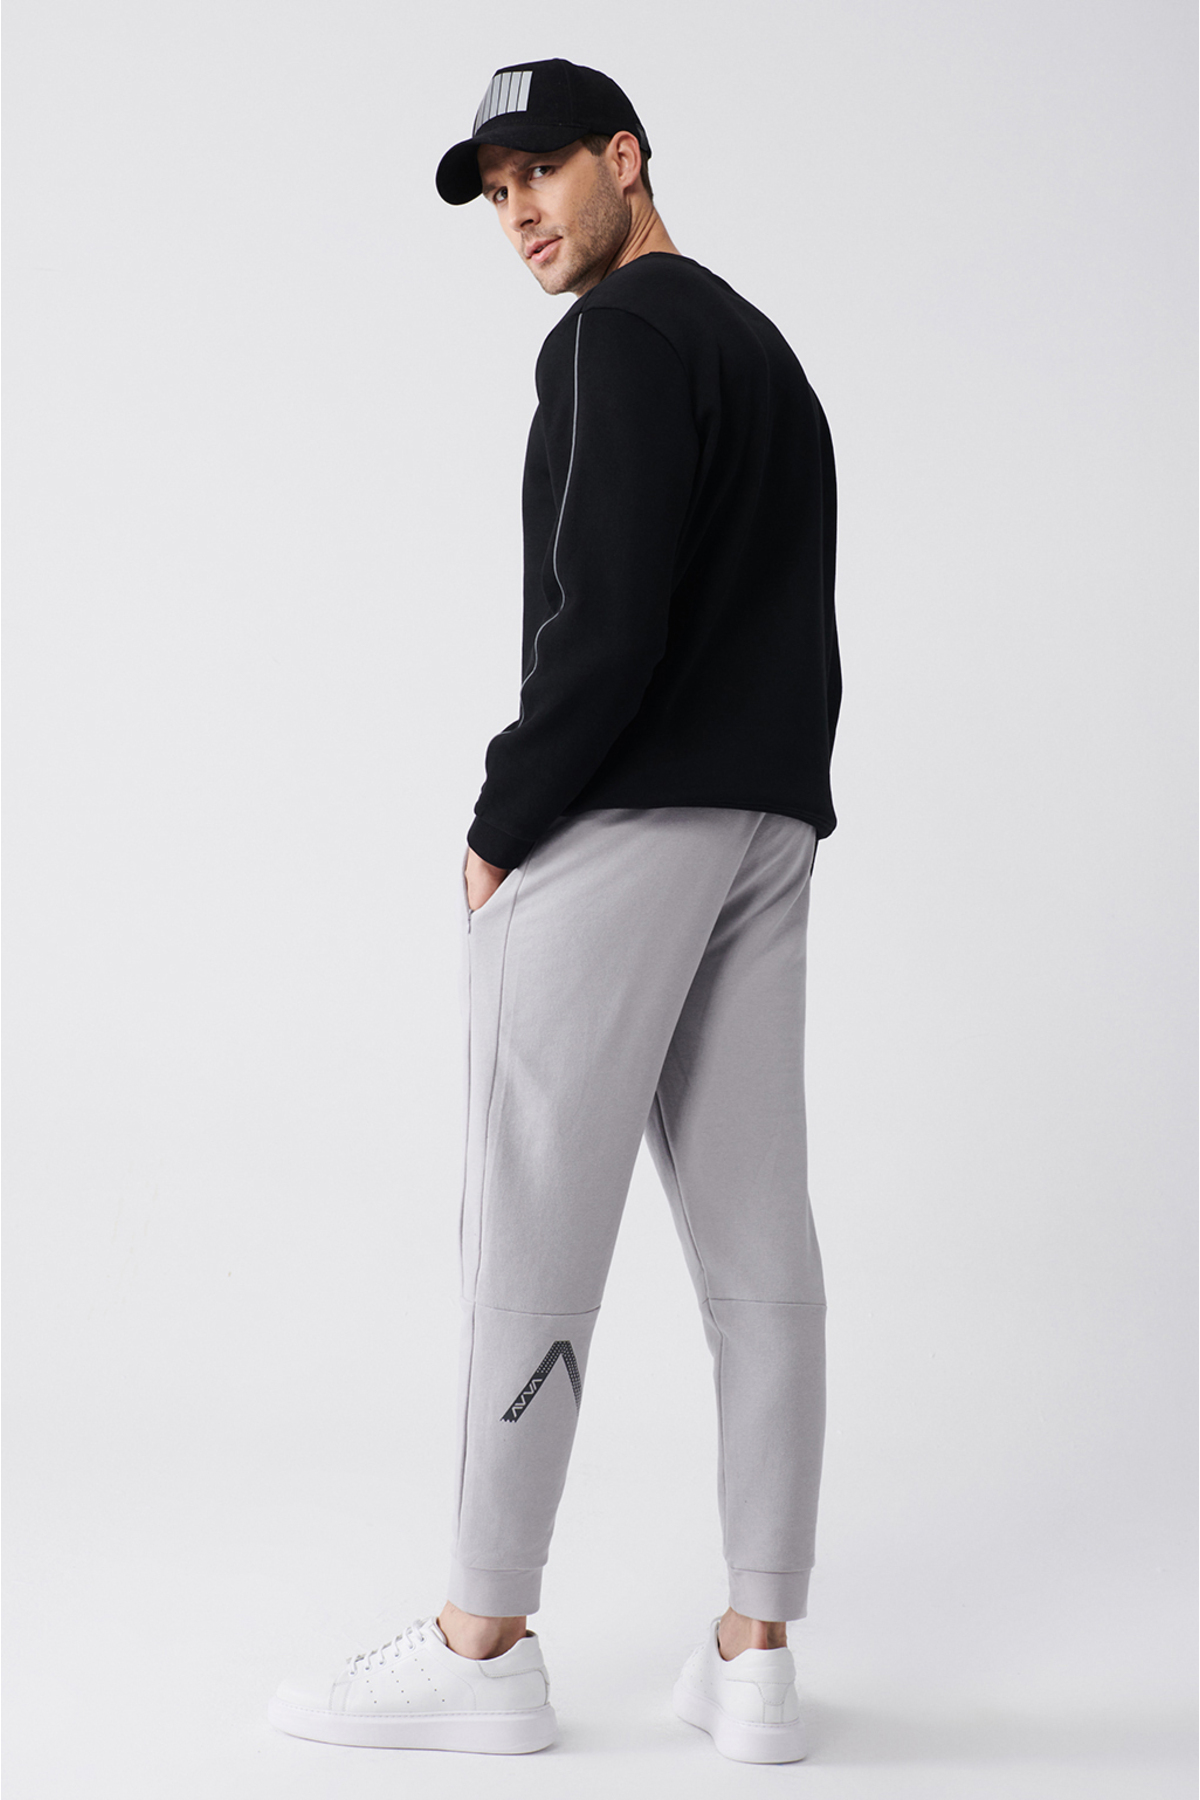 Avva Men's Gray Breathable Regular Fit Printed Jogger Sweatpants A